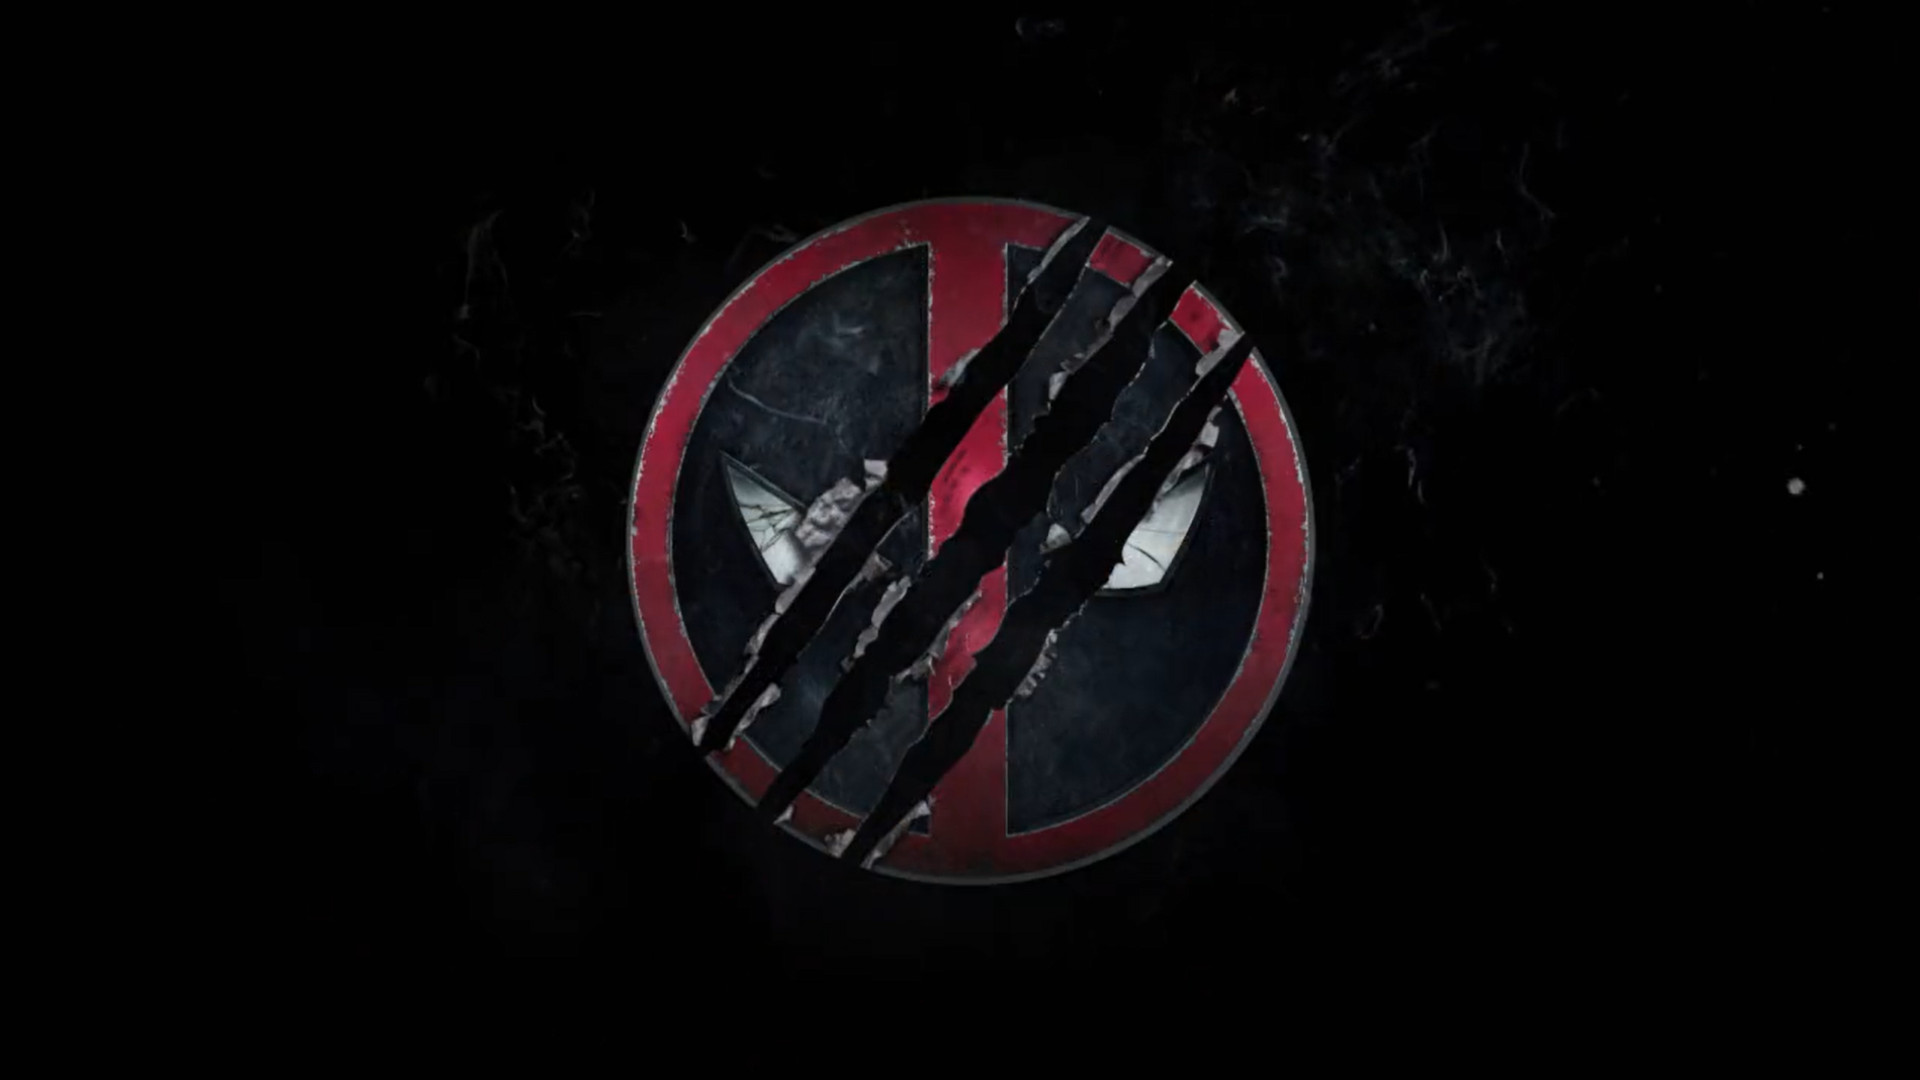 Deadpool 3”, Hugh Jackman will be back as Wolverine announced on